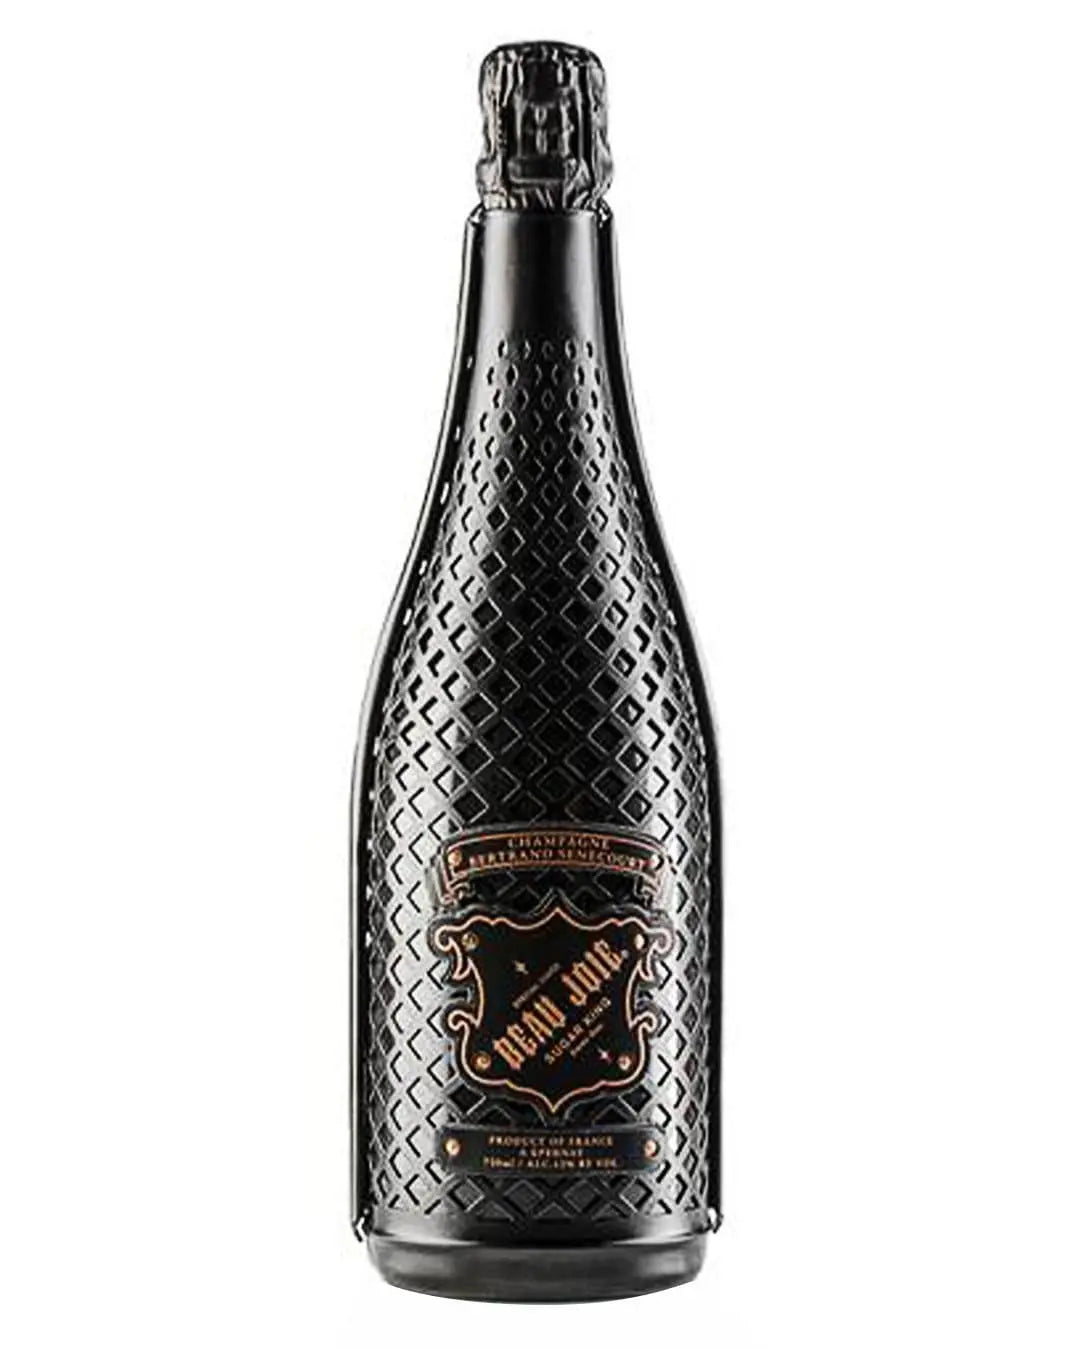 Beau Joie Demi Sec ‘Sugar King’ Champagne NV, 75 cl Champagne & Sparkling